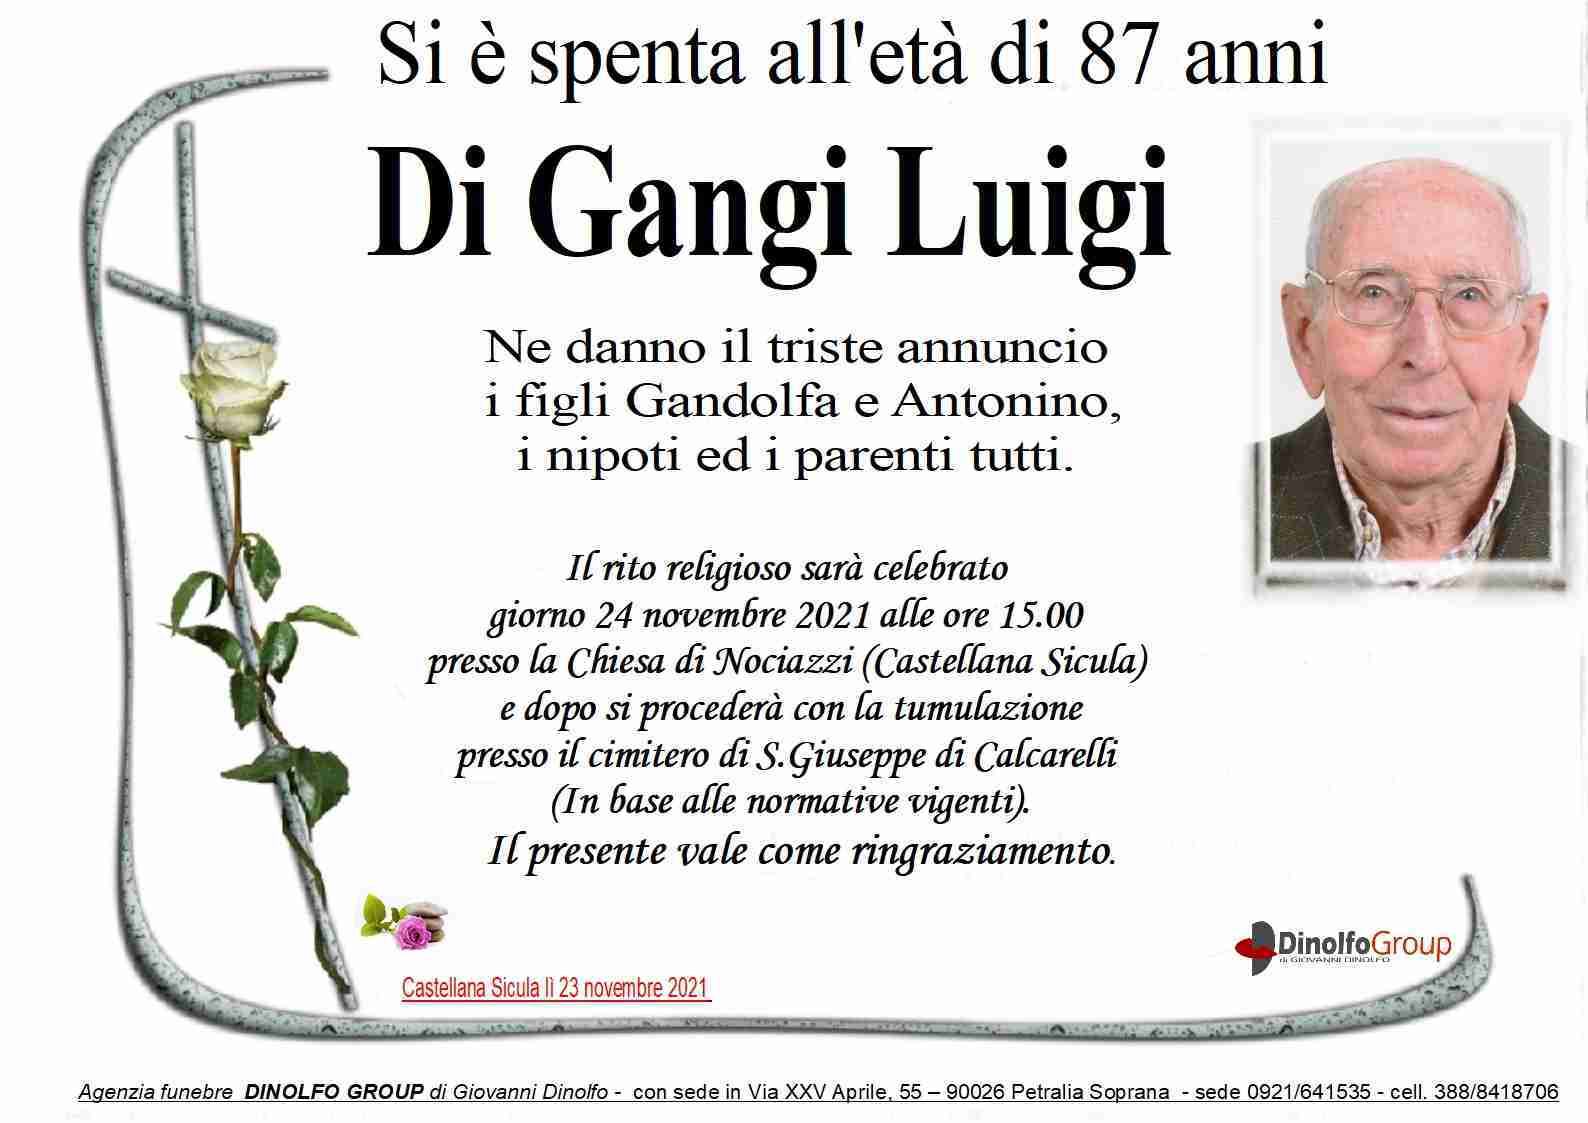 Luigi Di Gangi